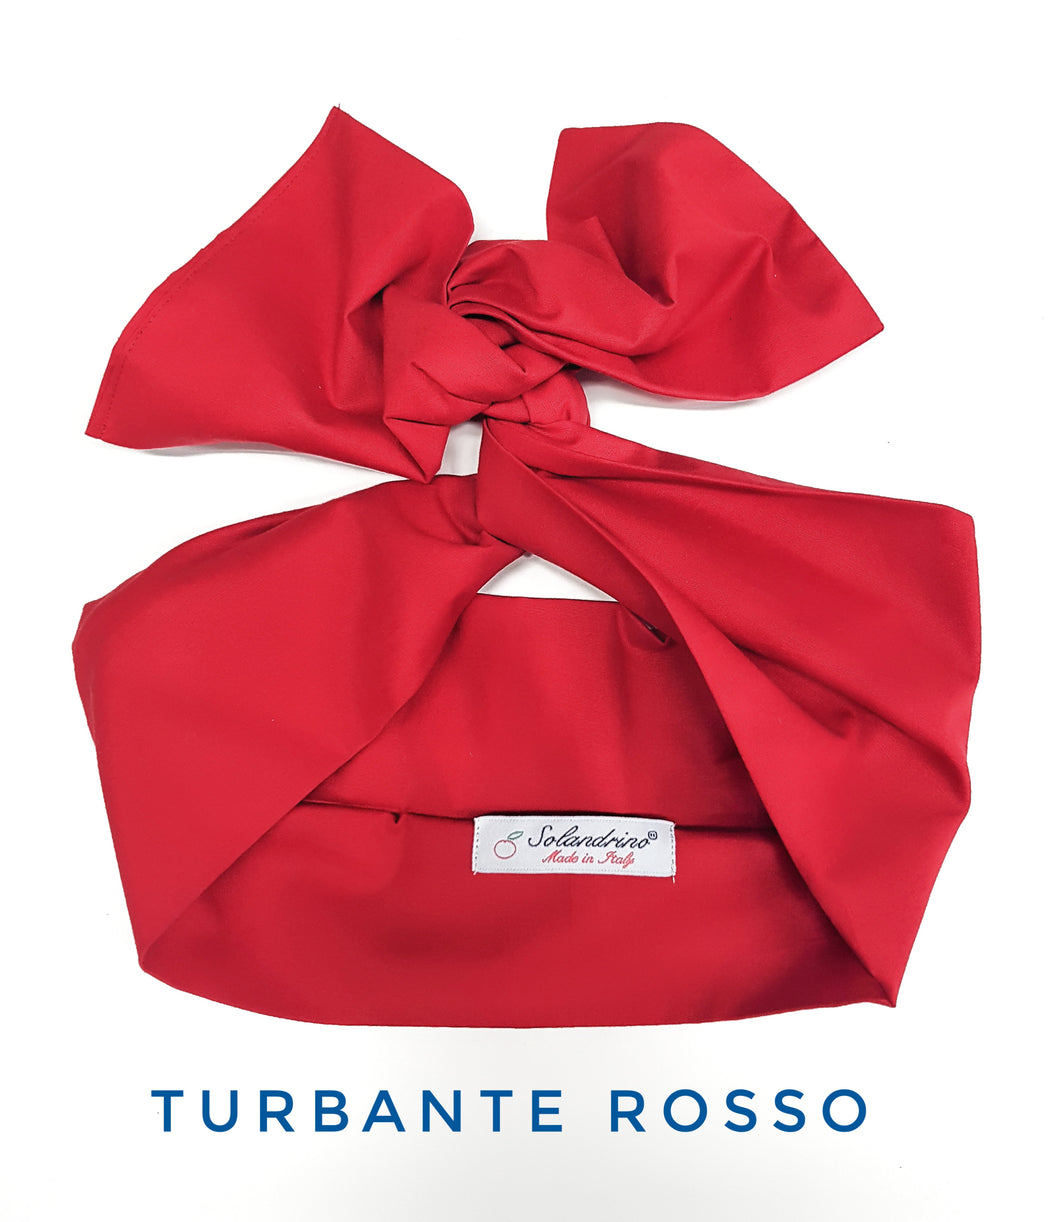 Turbante Rosso in cotone made in Italy fascia capelli hairband Red color